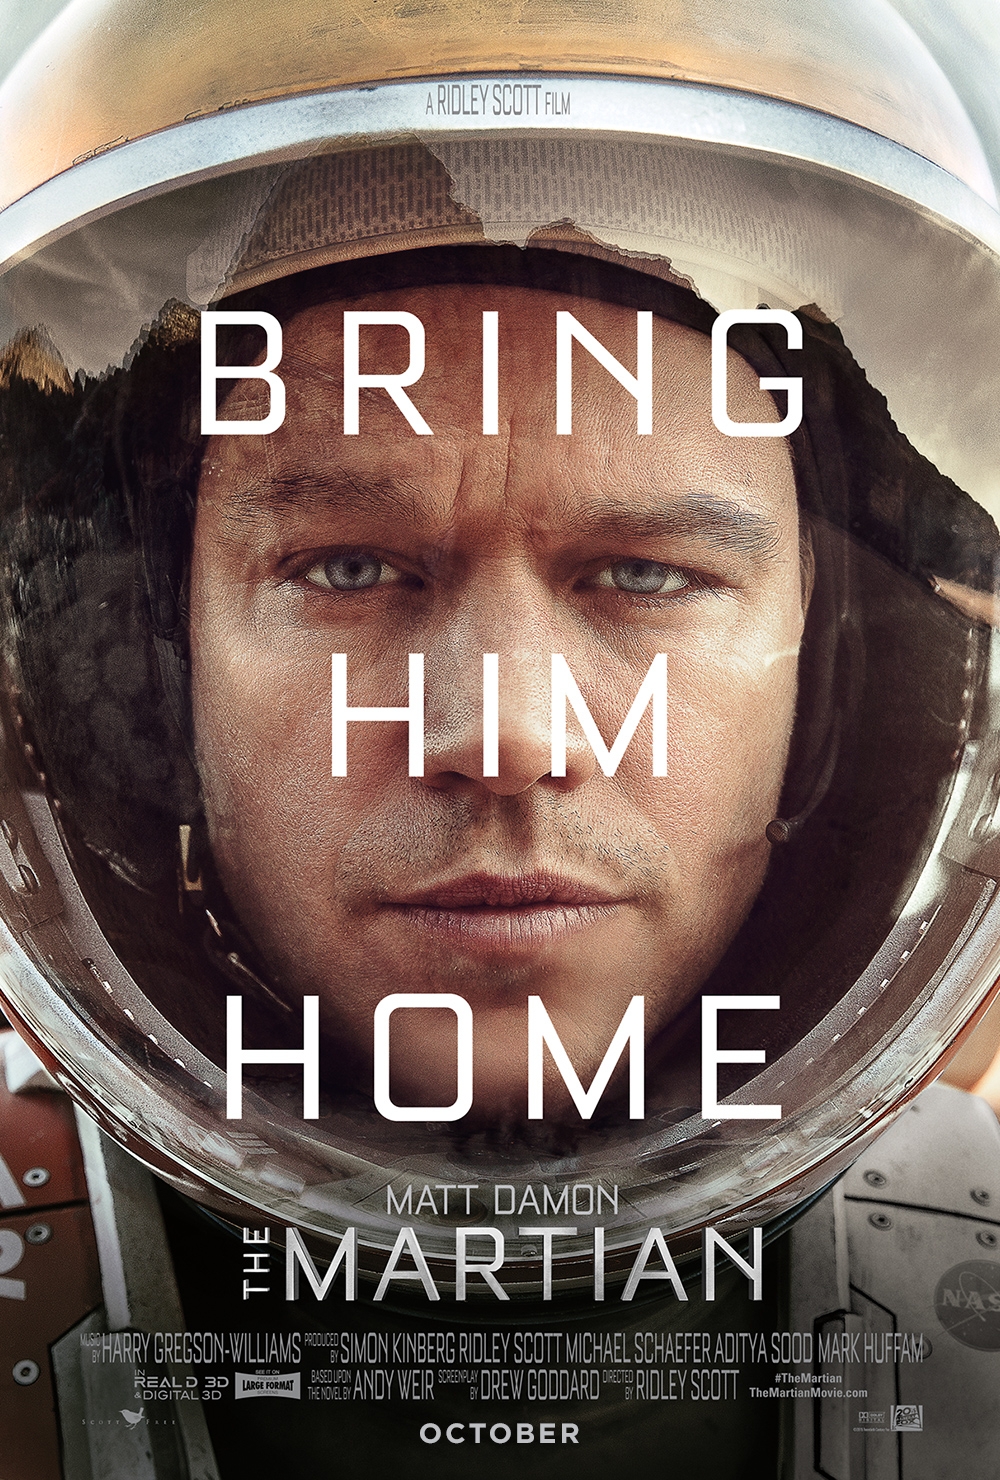 The-Martian-movie-poster.jpg